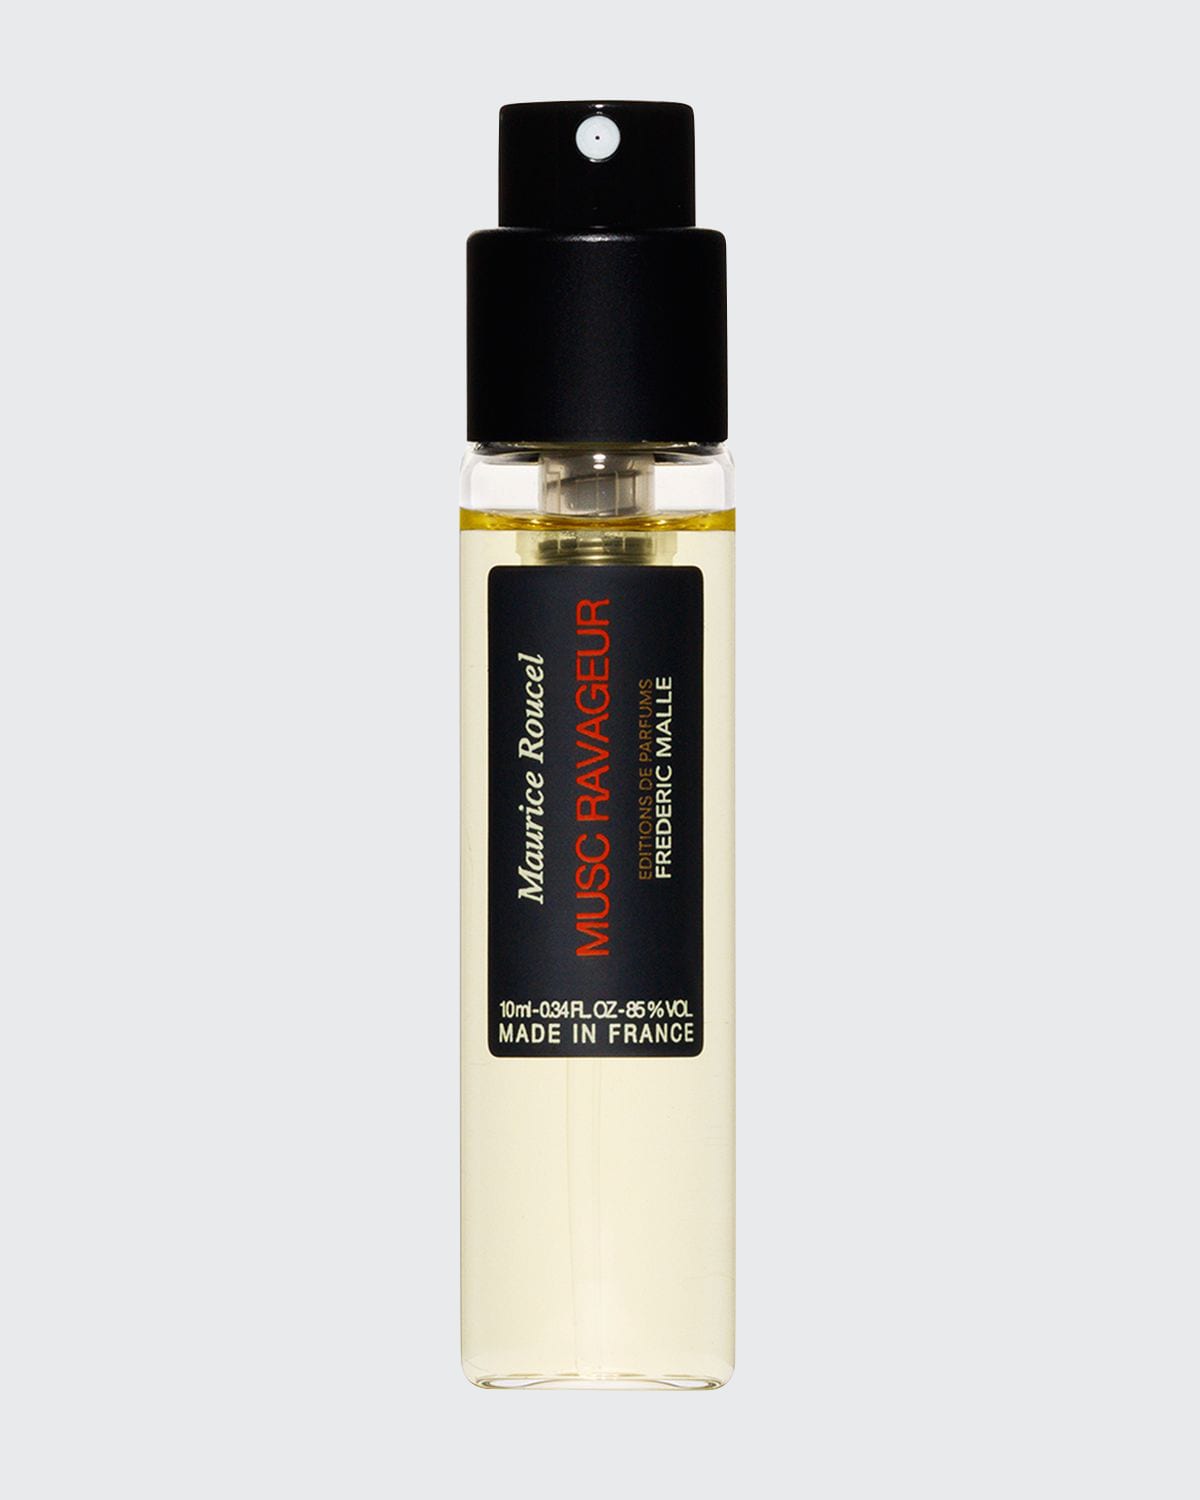 Frederic Malle Musc Ravageur Travel Perfume Refill, 0.3 oz./ 10 mL